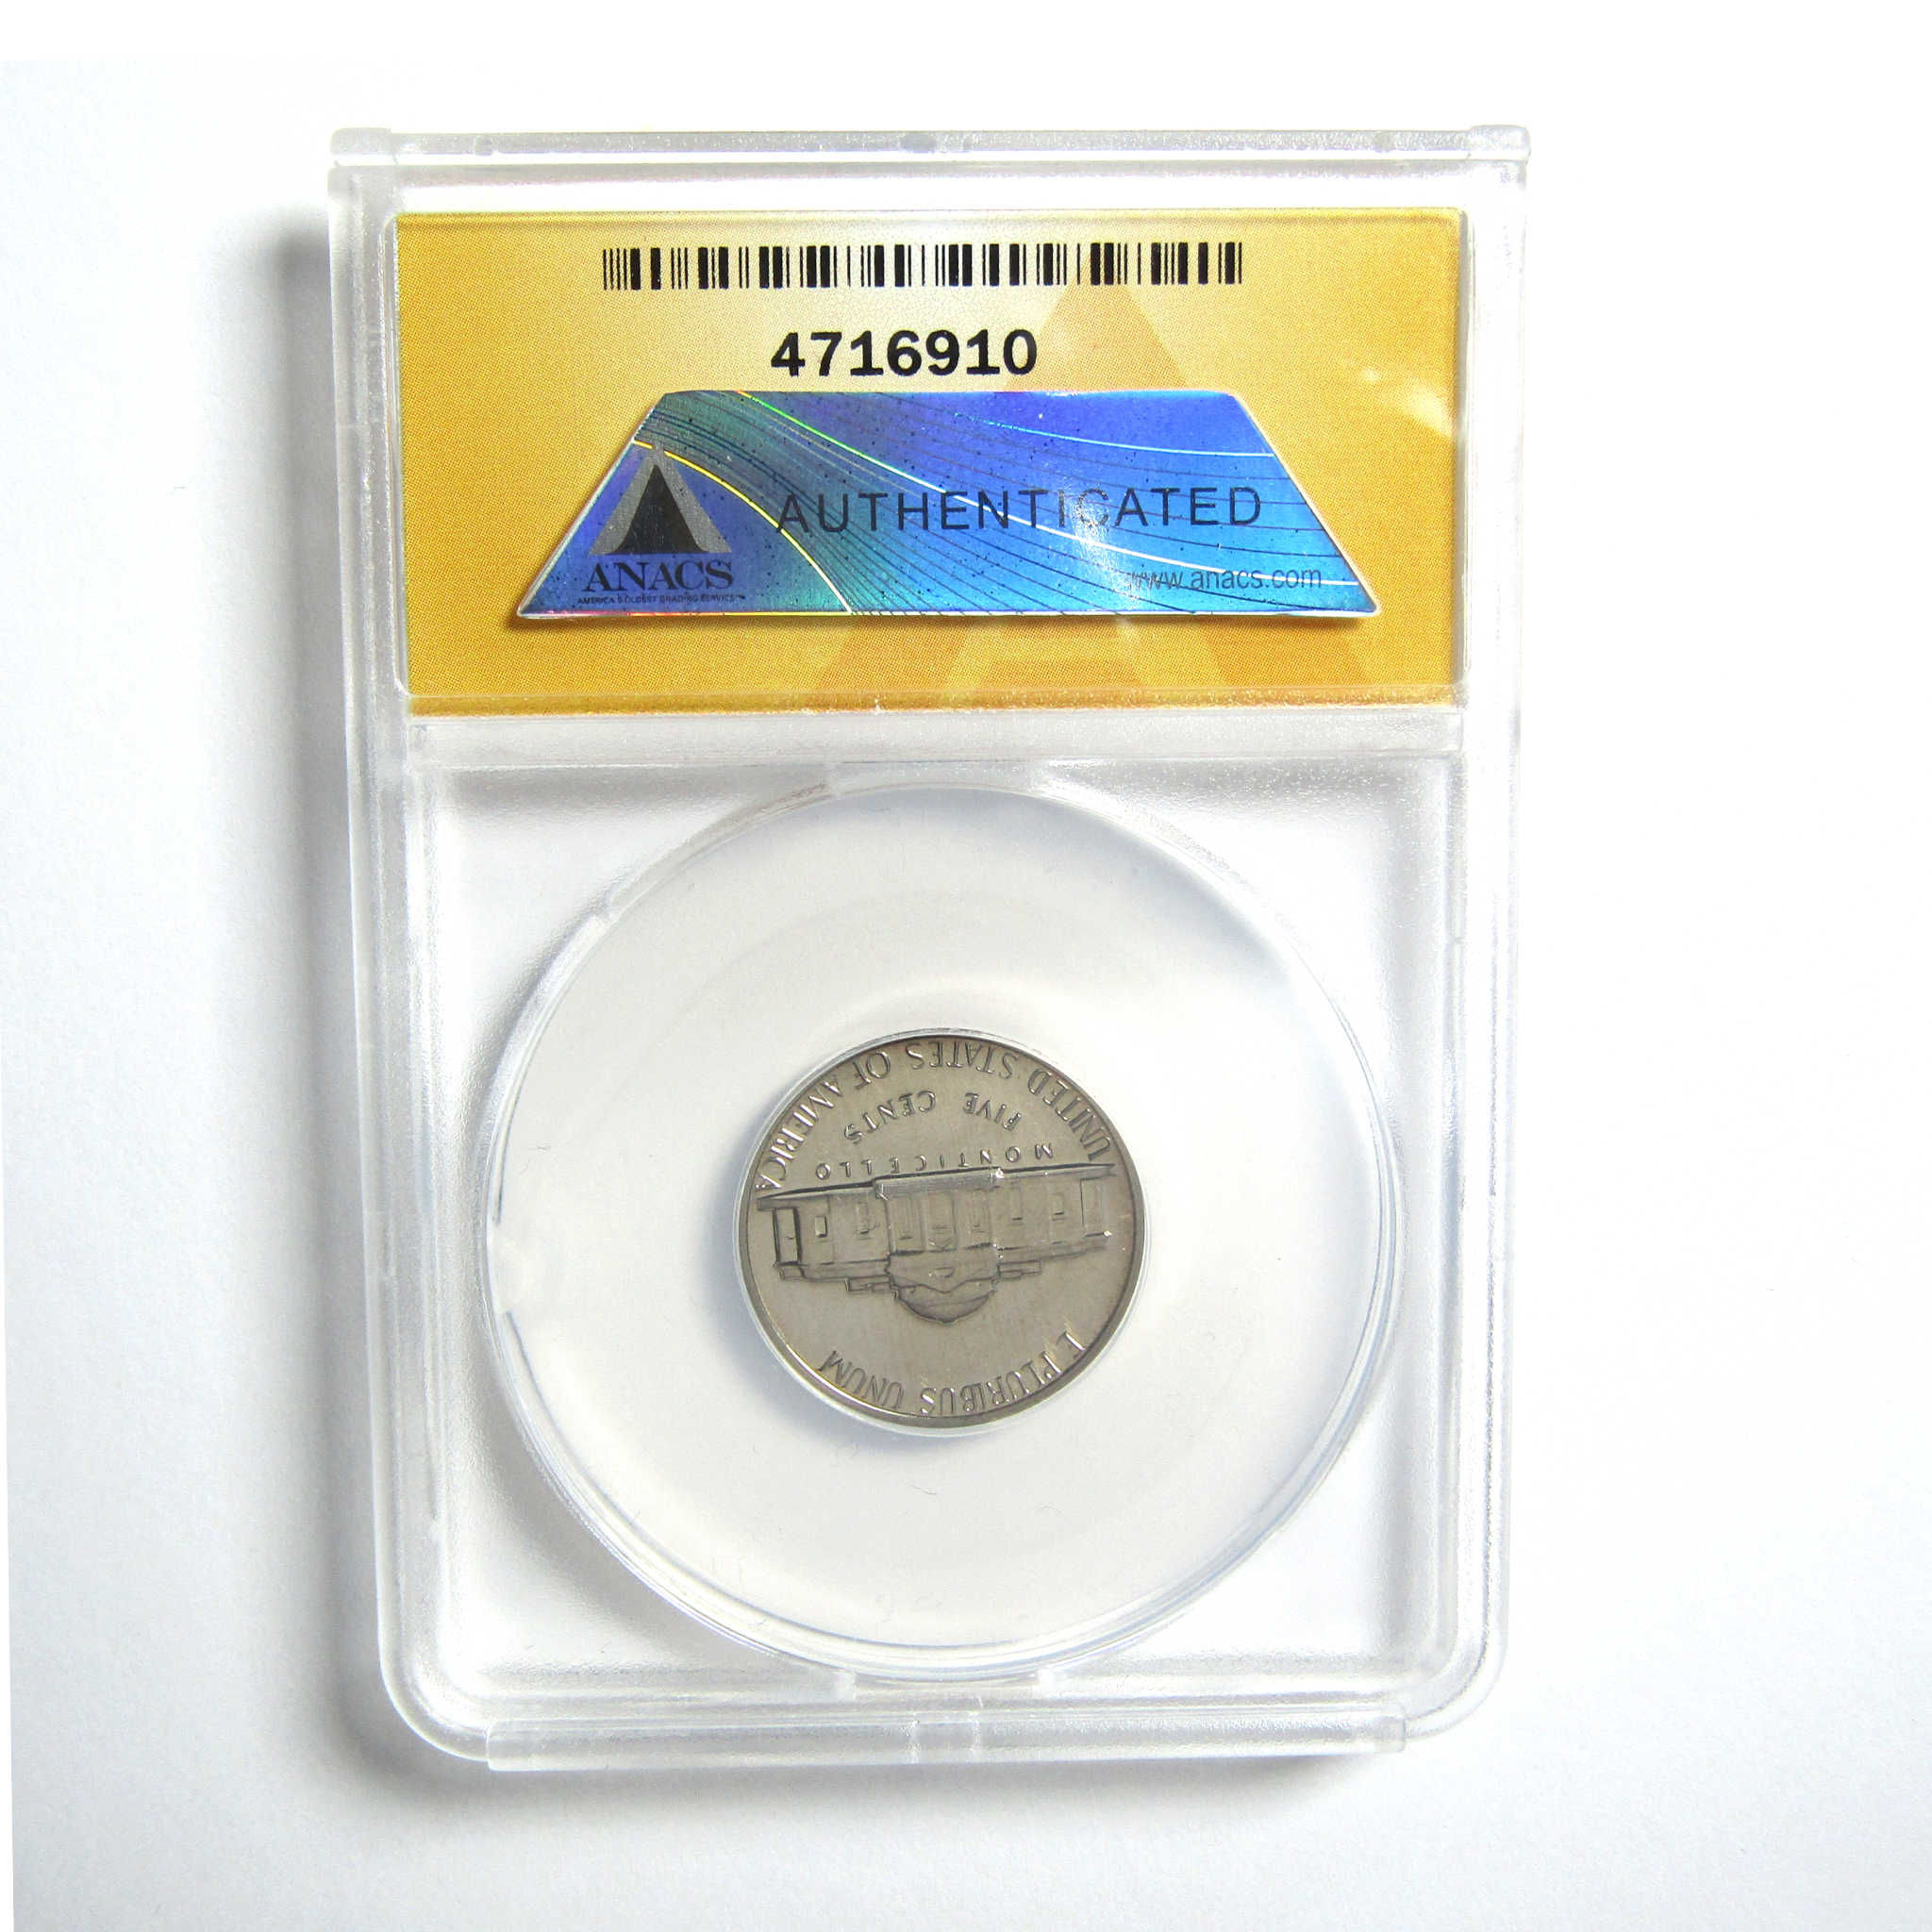 1970 S Jefferson Nickel PF 67 ANACS 5c Proof Coin SKU:CPC5076